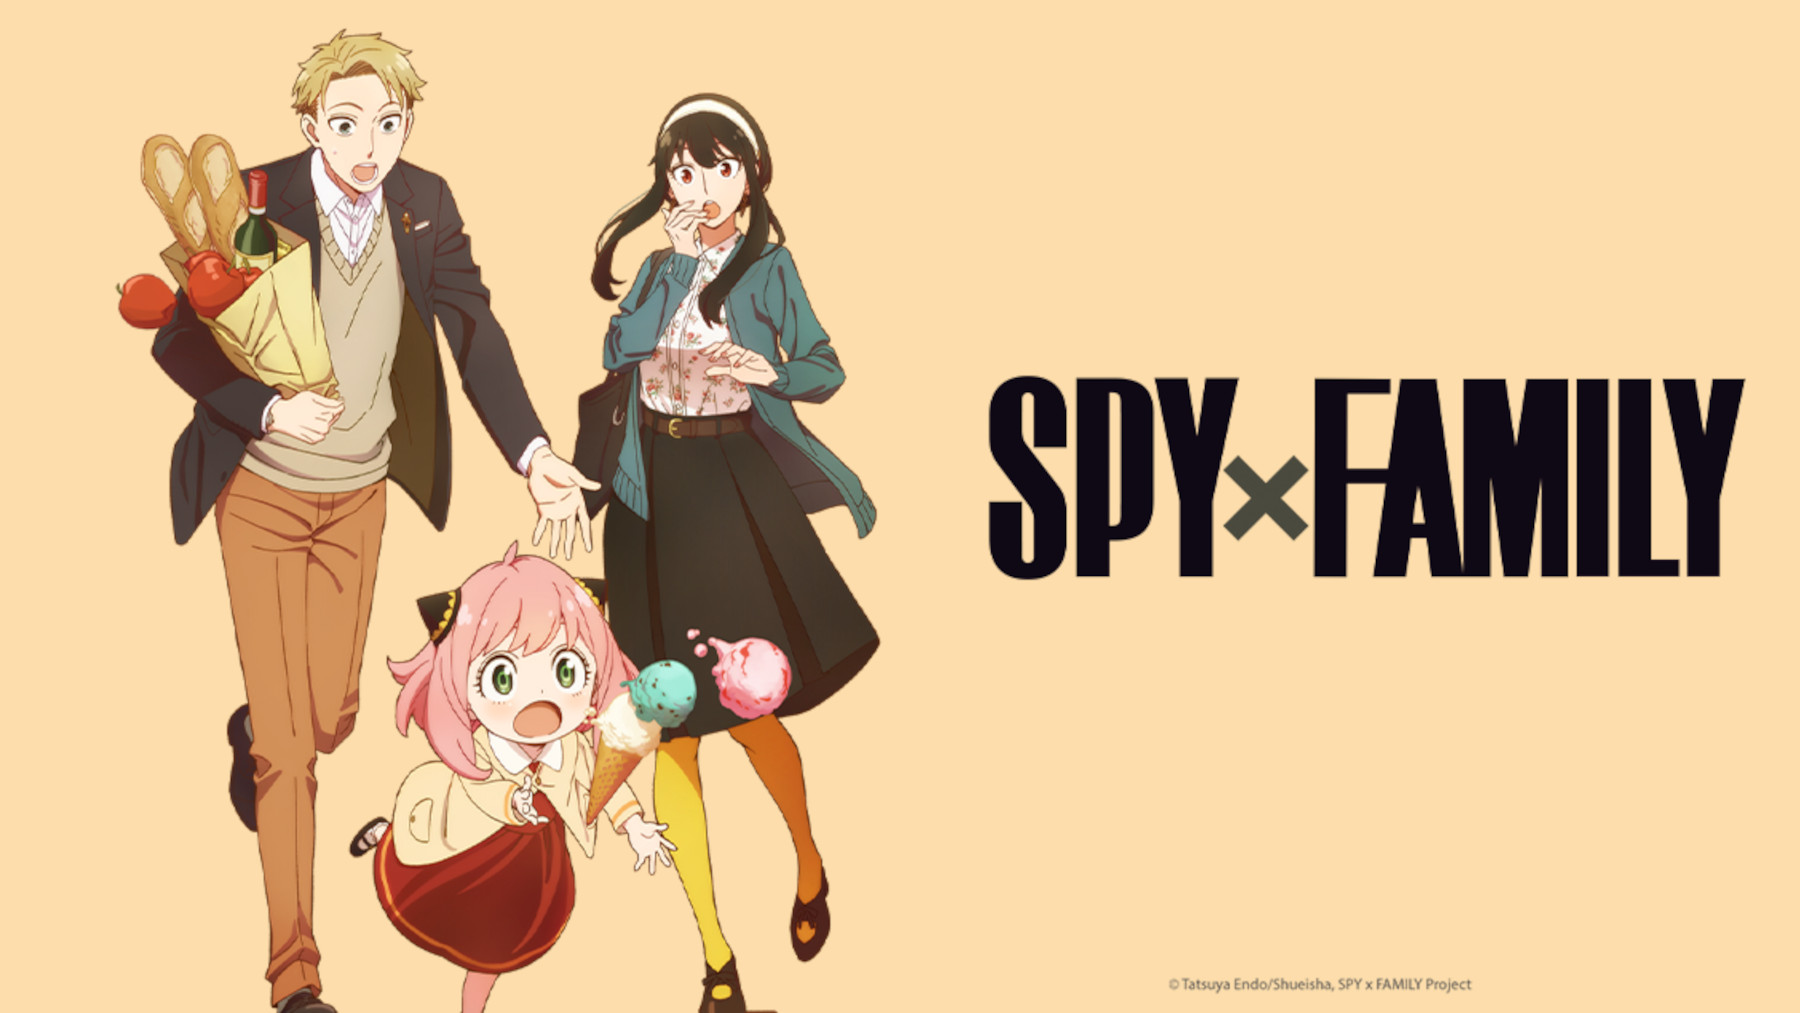 spy x family: Spy x Family season 2 will air in 2023 - The Economic Times